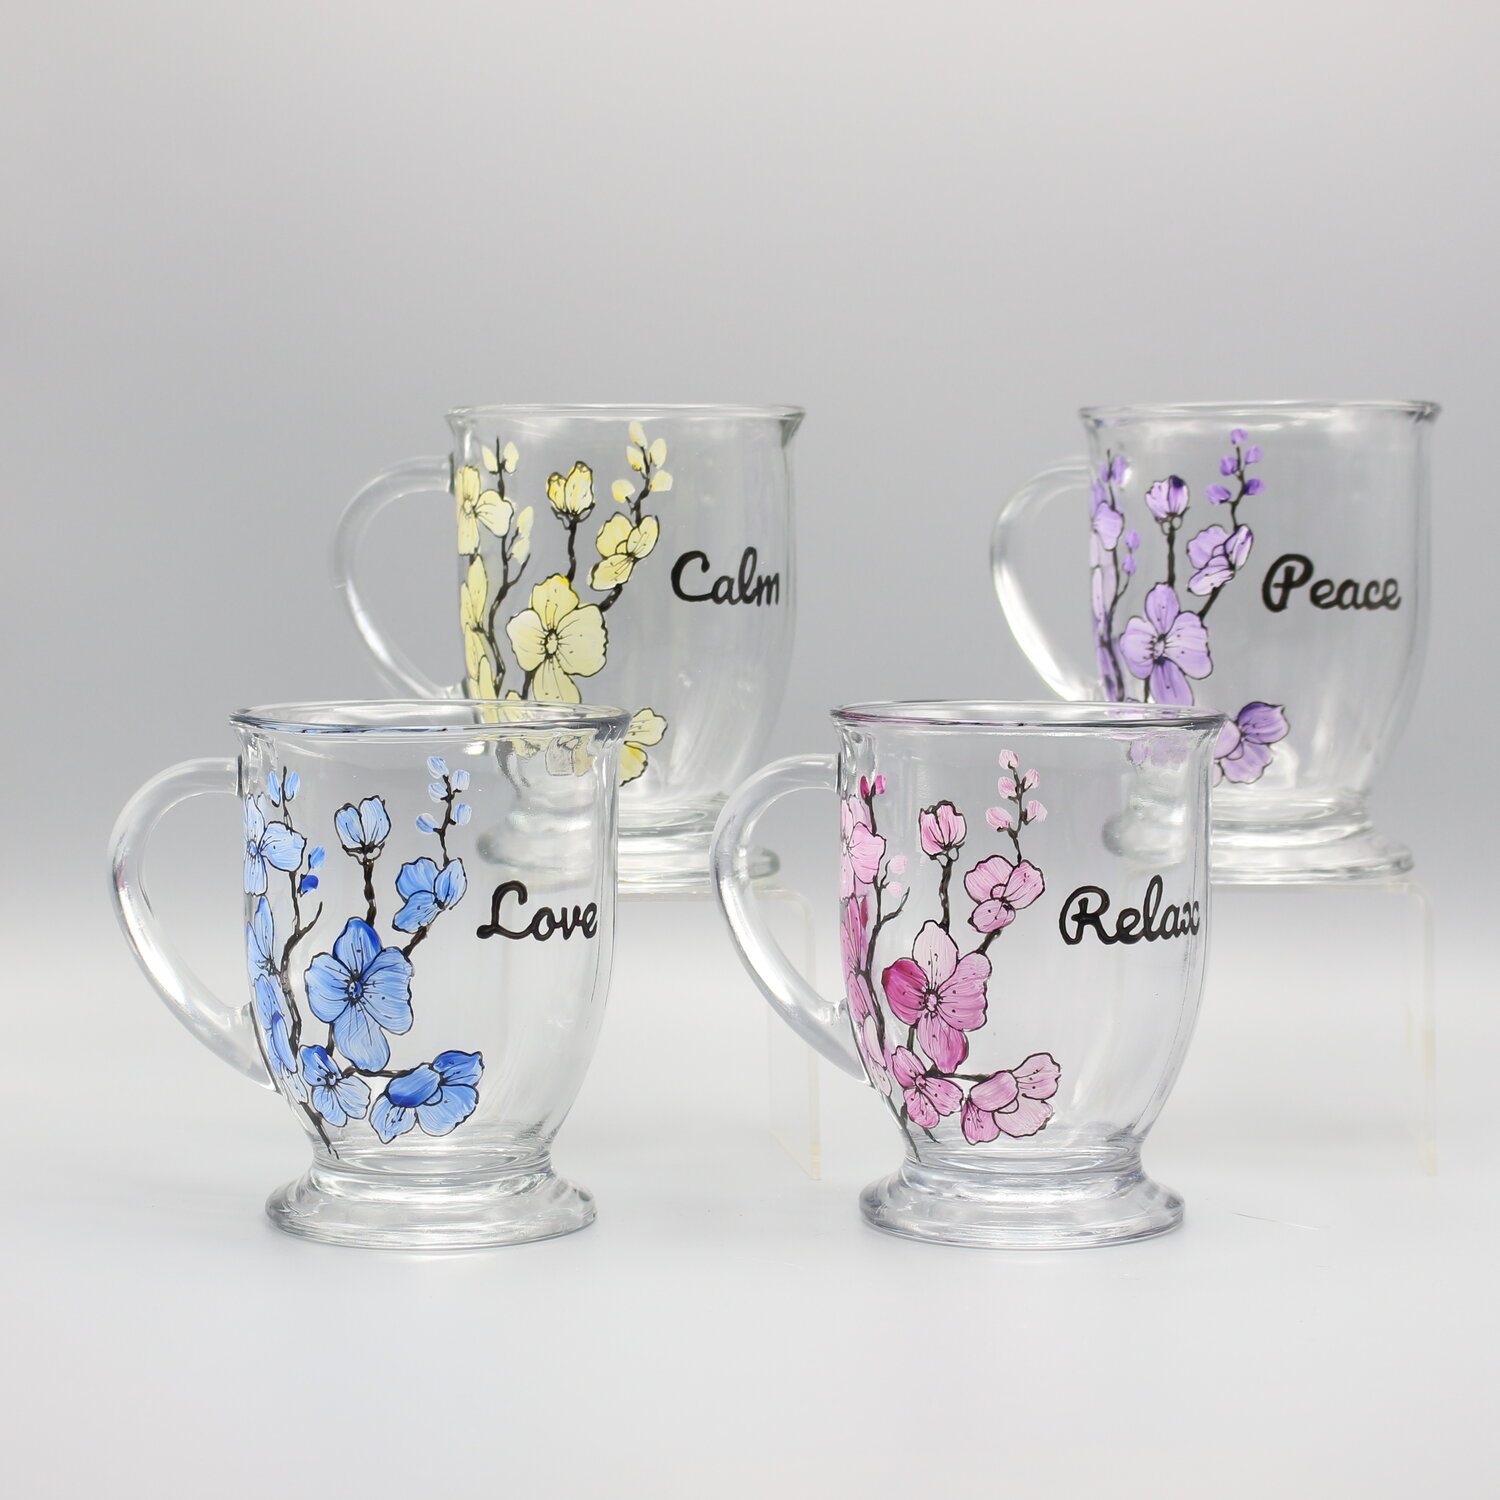 Inspirational Mugs Gift Set, Set of Four